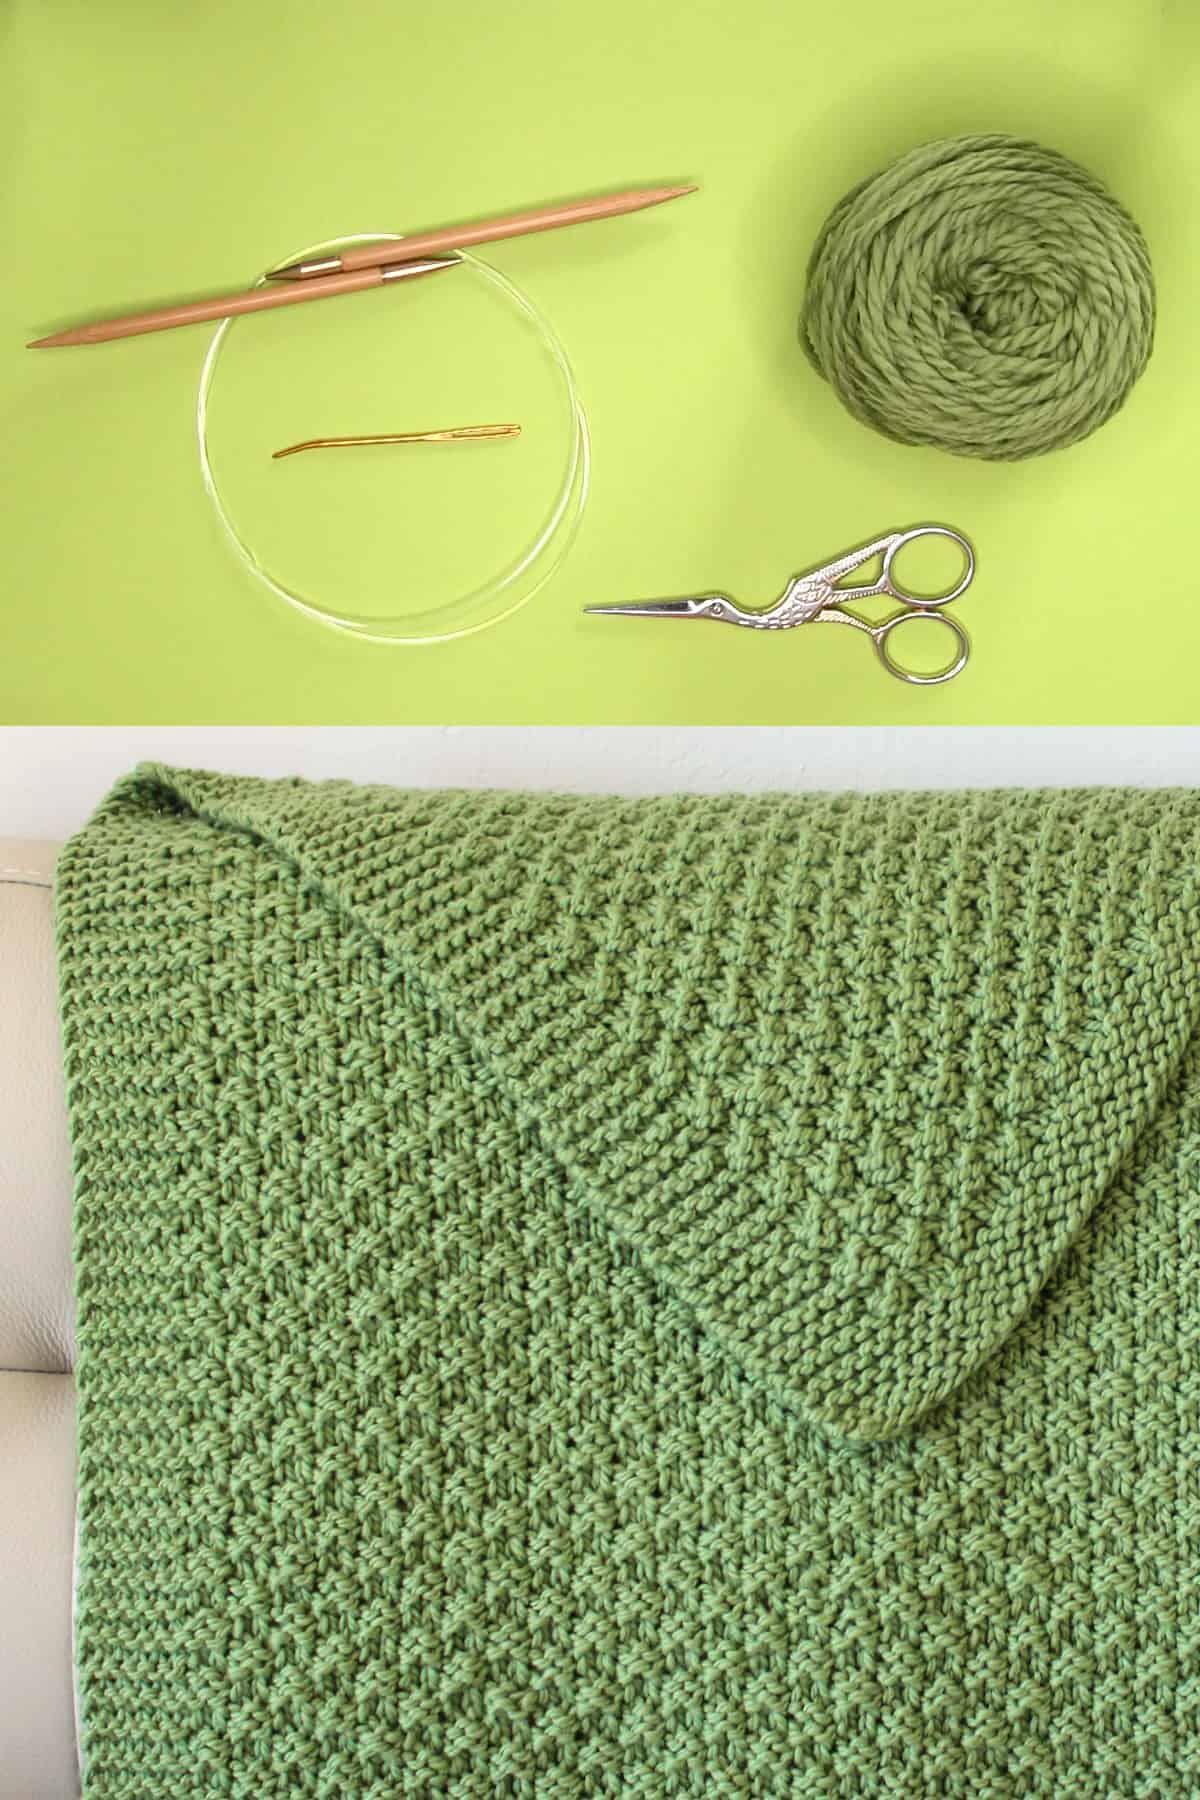 Circular knitting needle, yarn, tapestry needle, scissors, and Moss Landing Blanket.